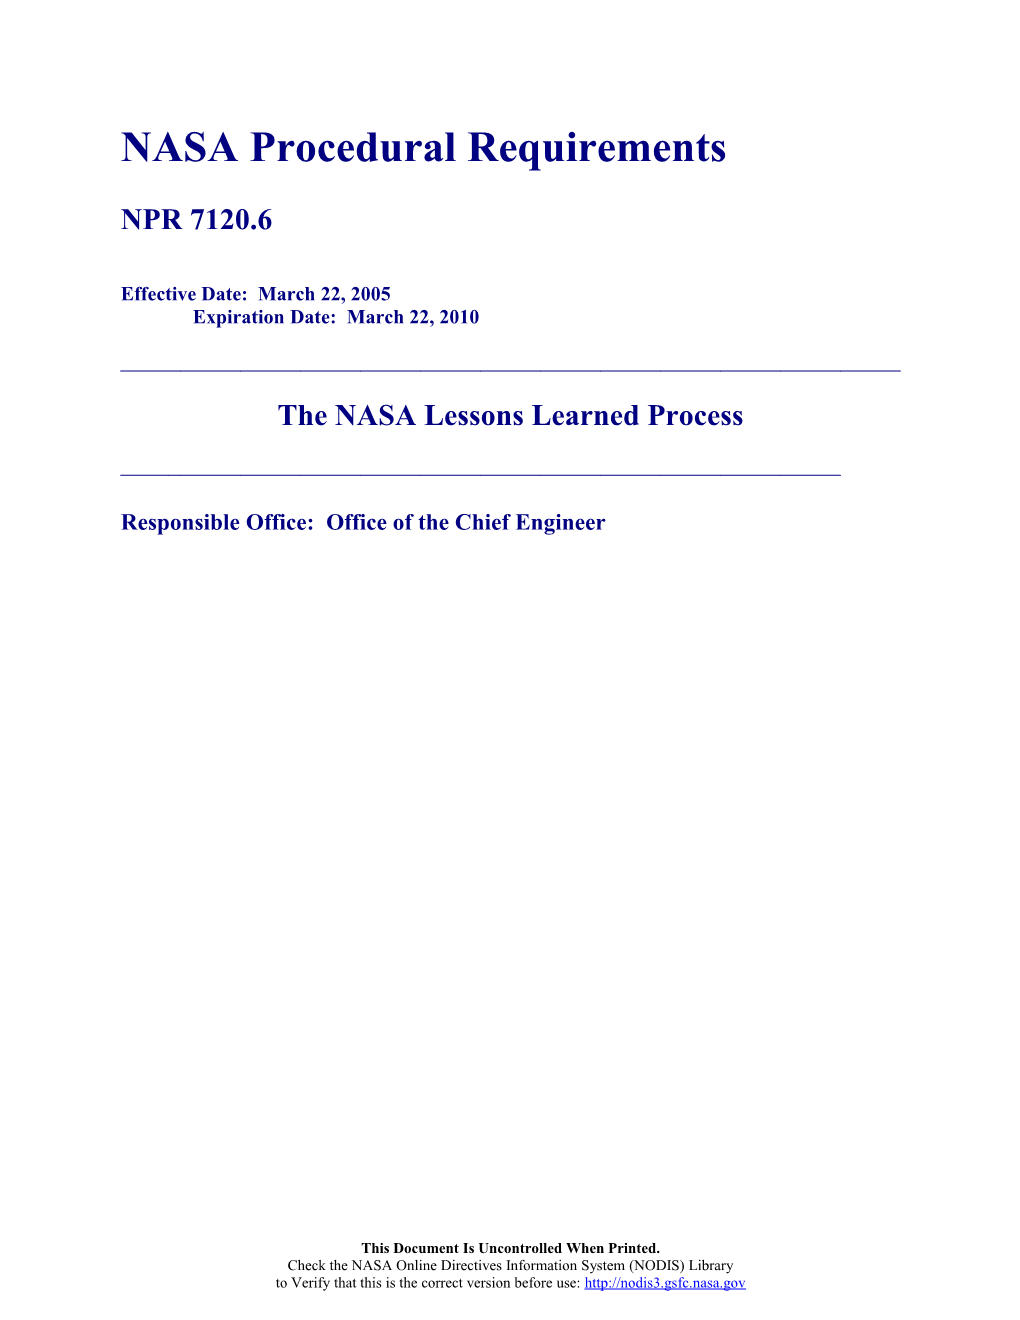 NASA Procedural Requirements s1